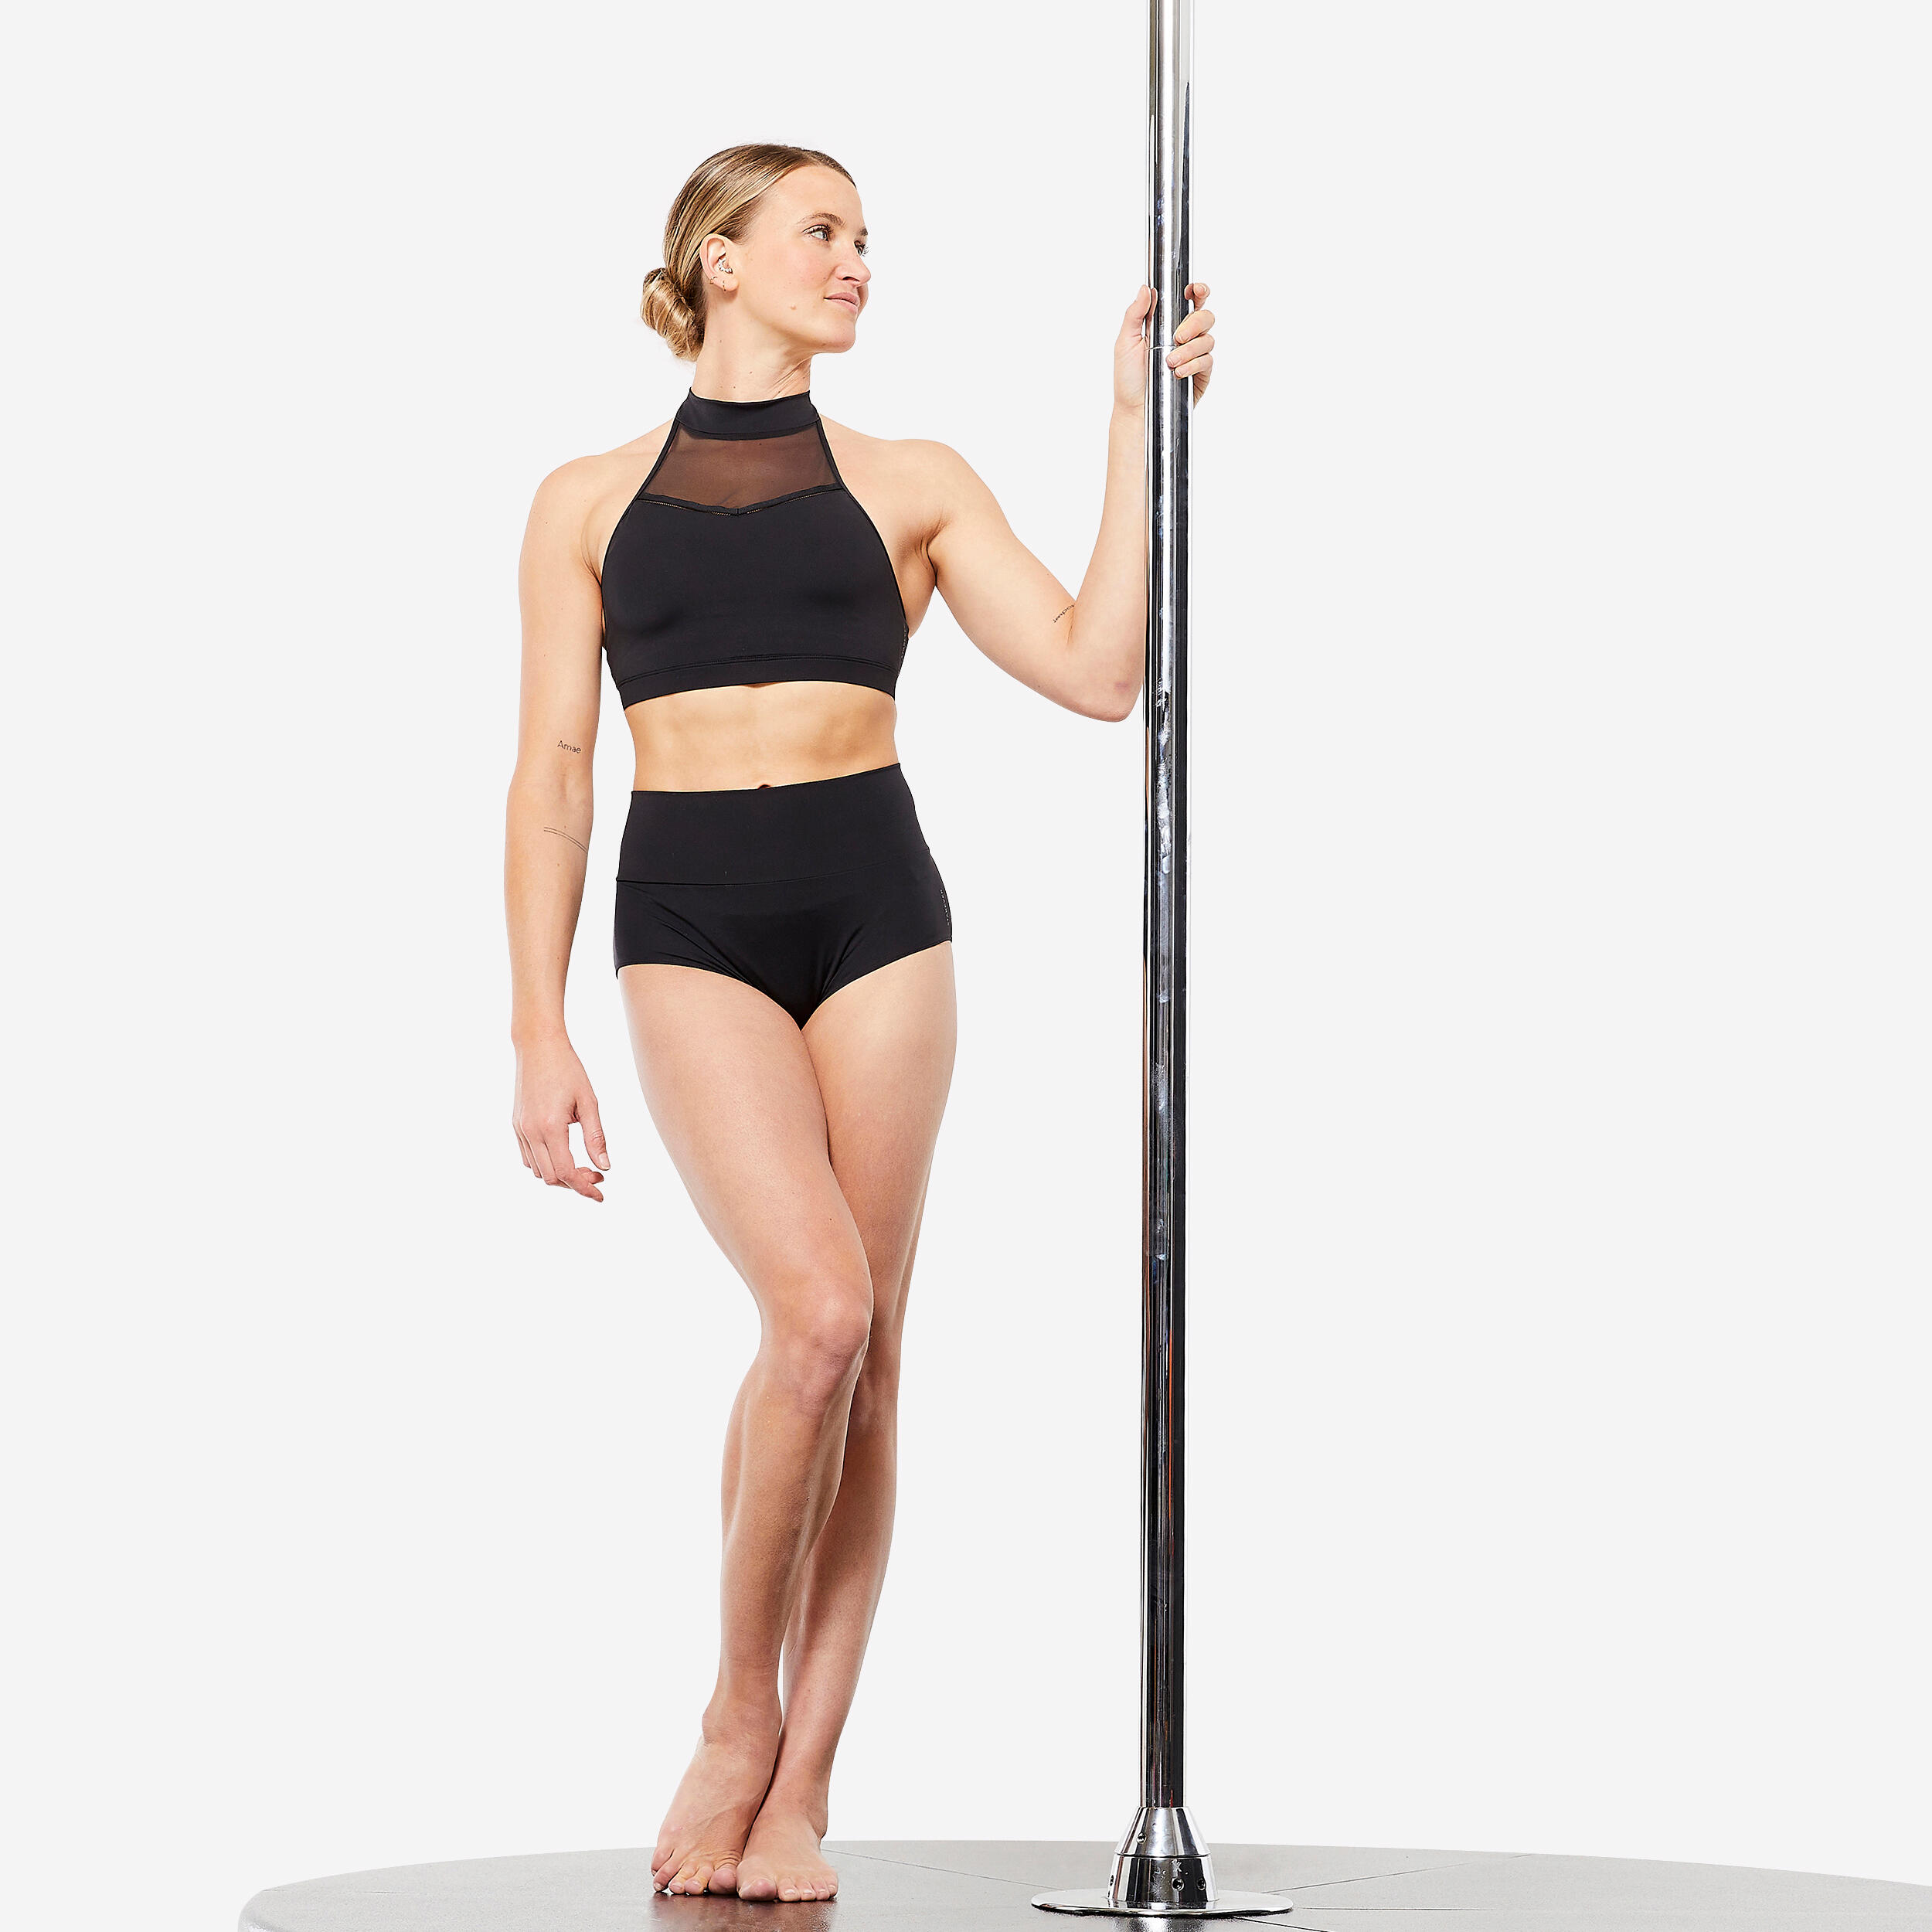 Women's Bi-Material Pole Dancing Halter Bra - Black 2/5